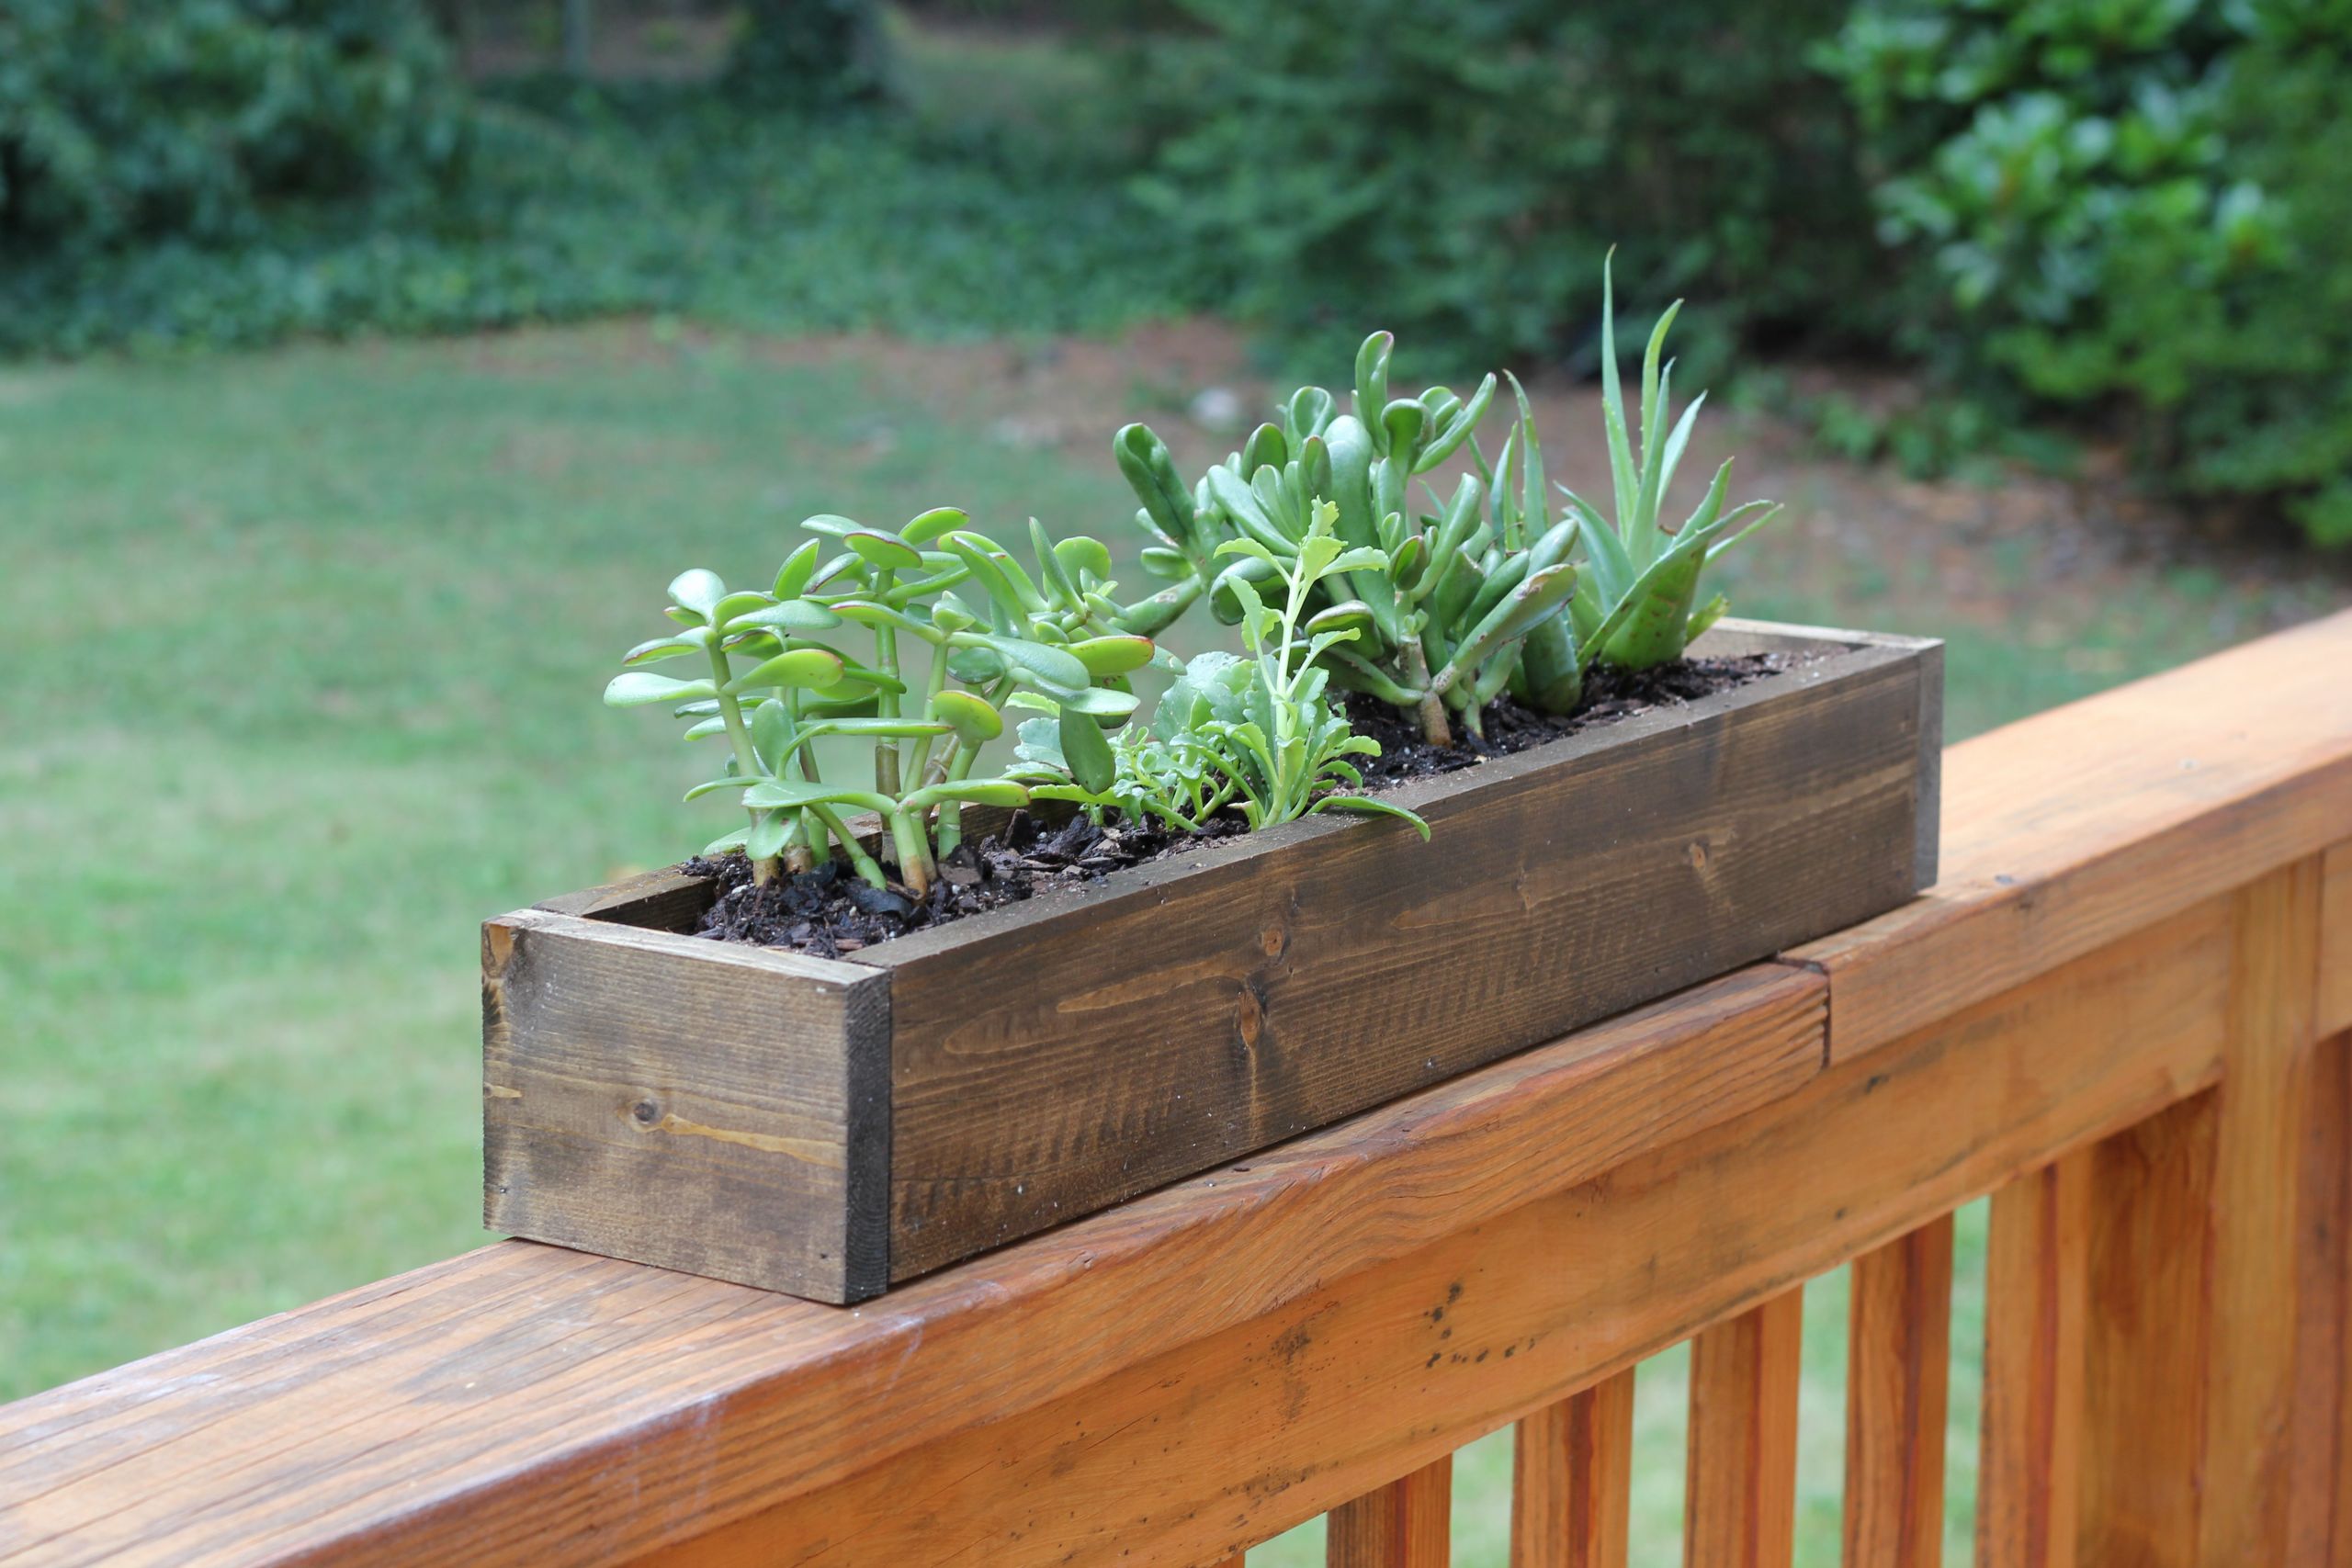 DIY Indoor Planter Box
 Apartment DIY Build Your Own Planter Box